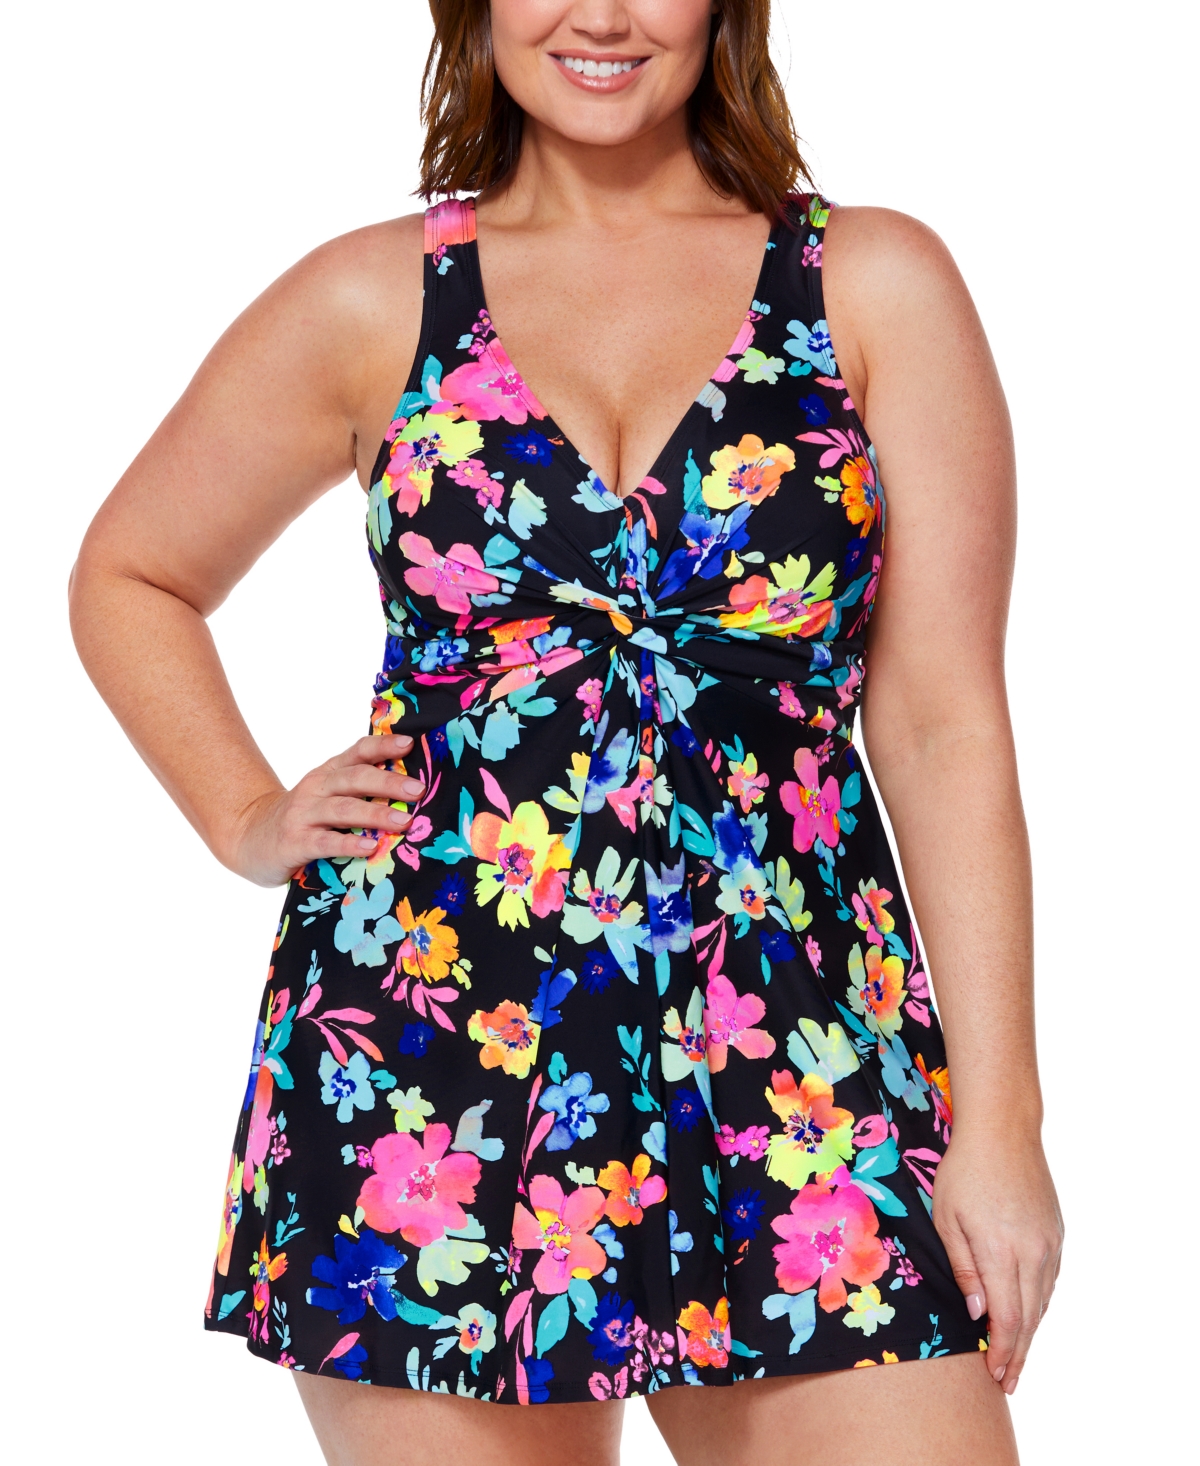 Island Escape Plus Size Magnolia Floral-Print Swim Dress, Created for Macy's Women's Swimsuit